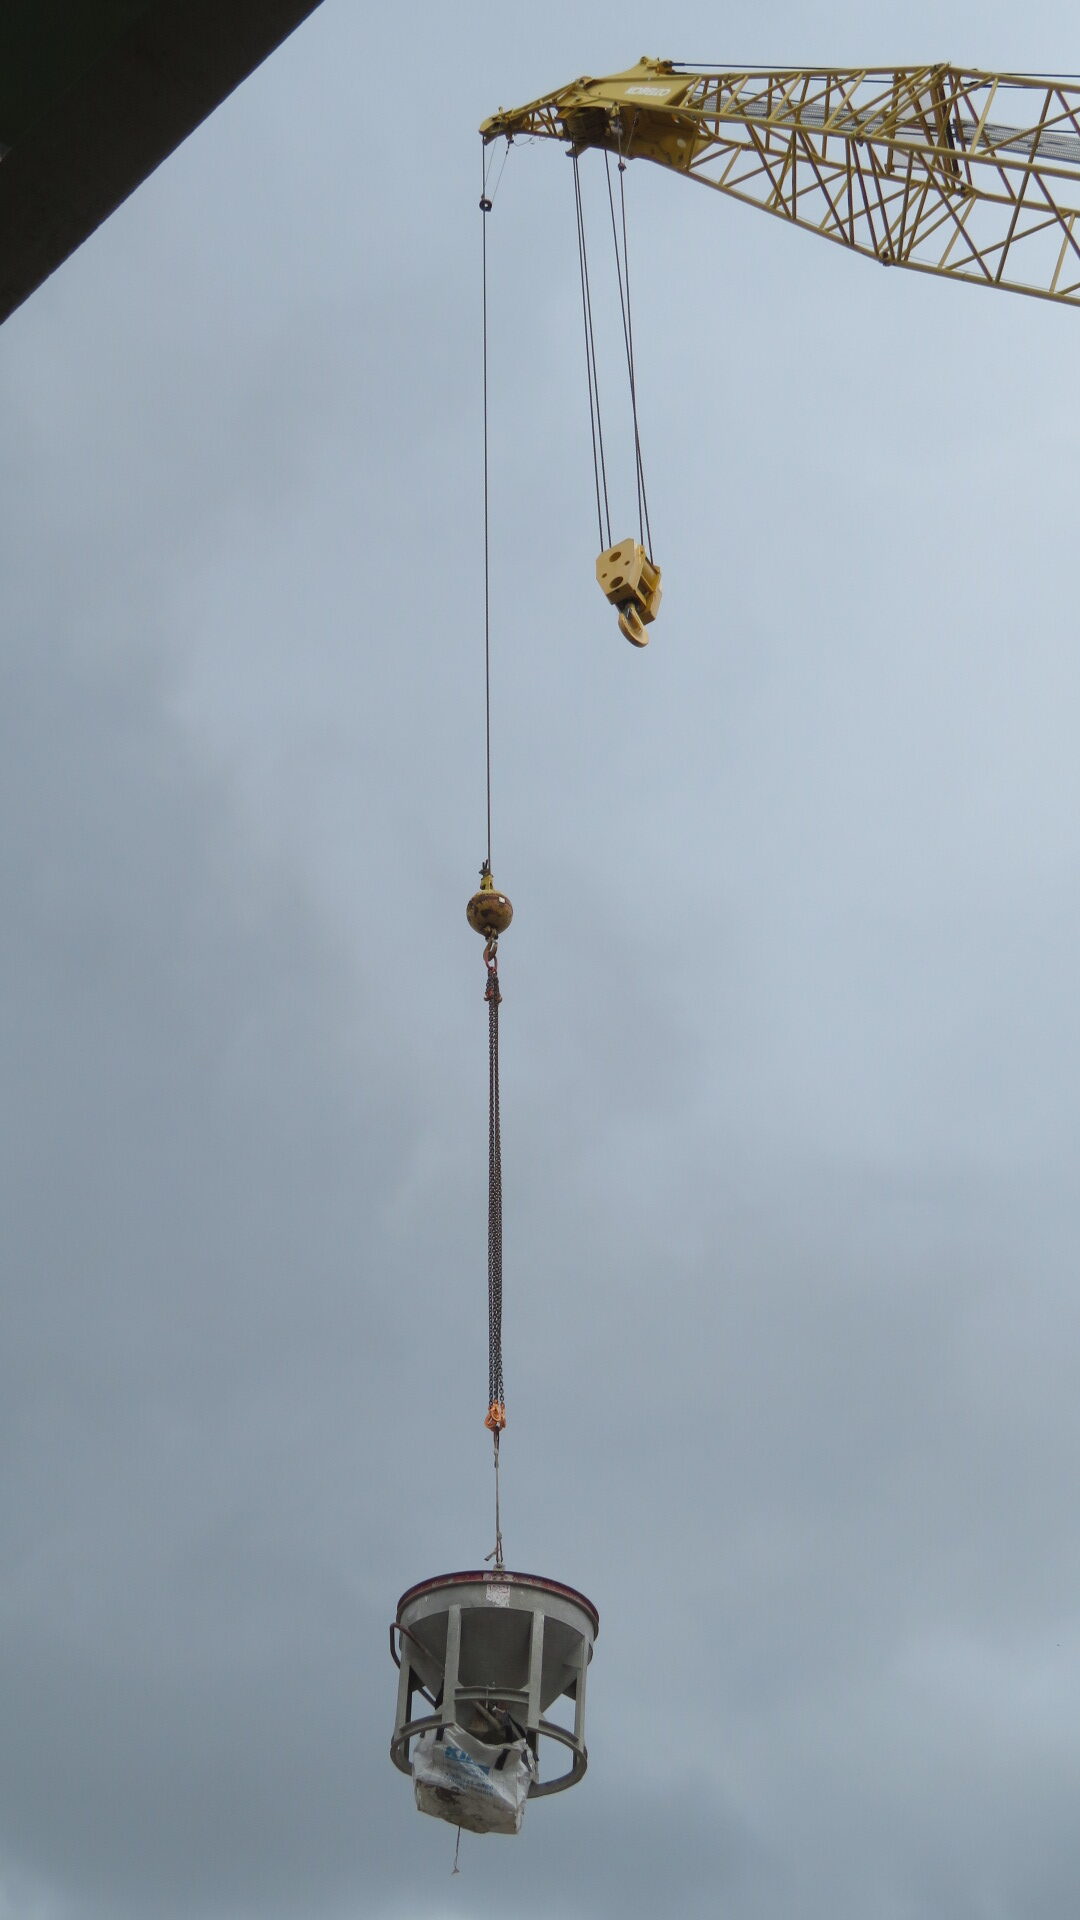 200-ton crane lifting the full concrete hopper to the pier cap